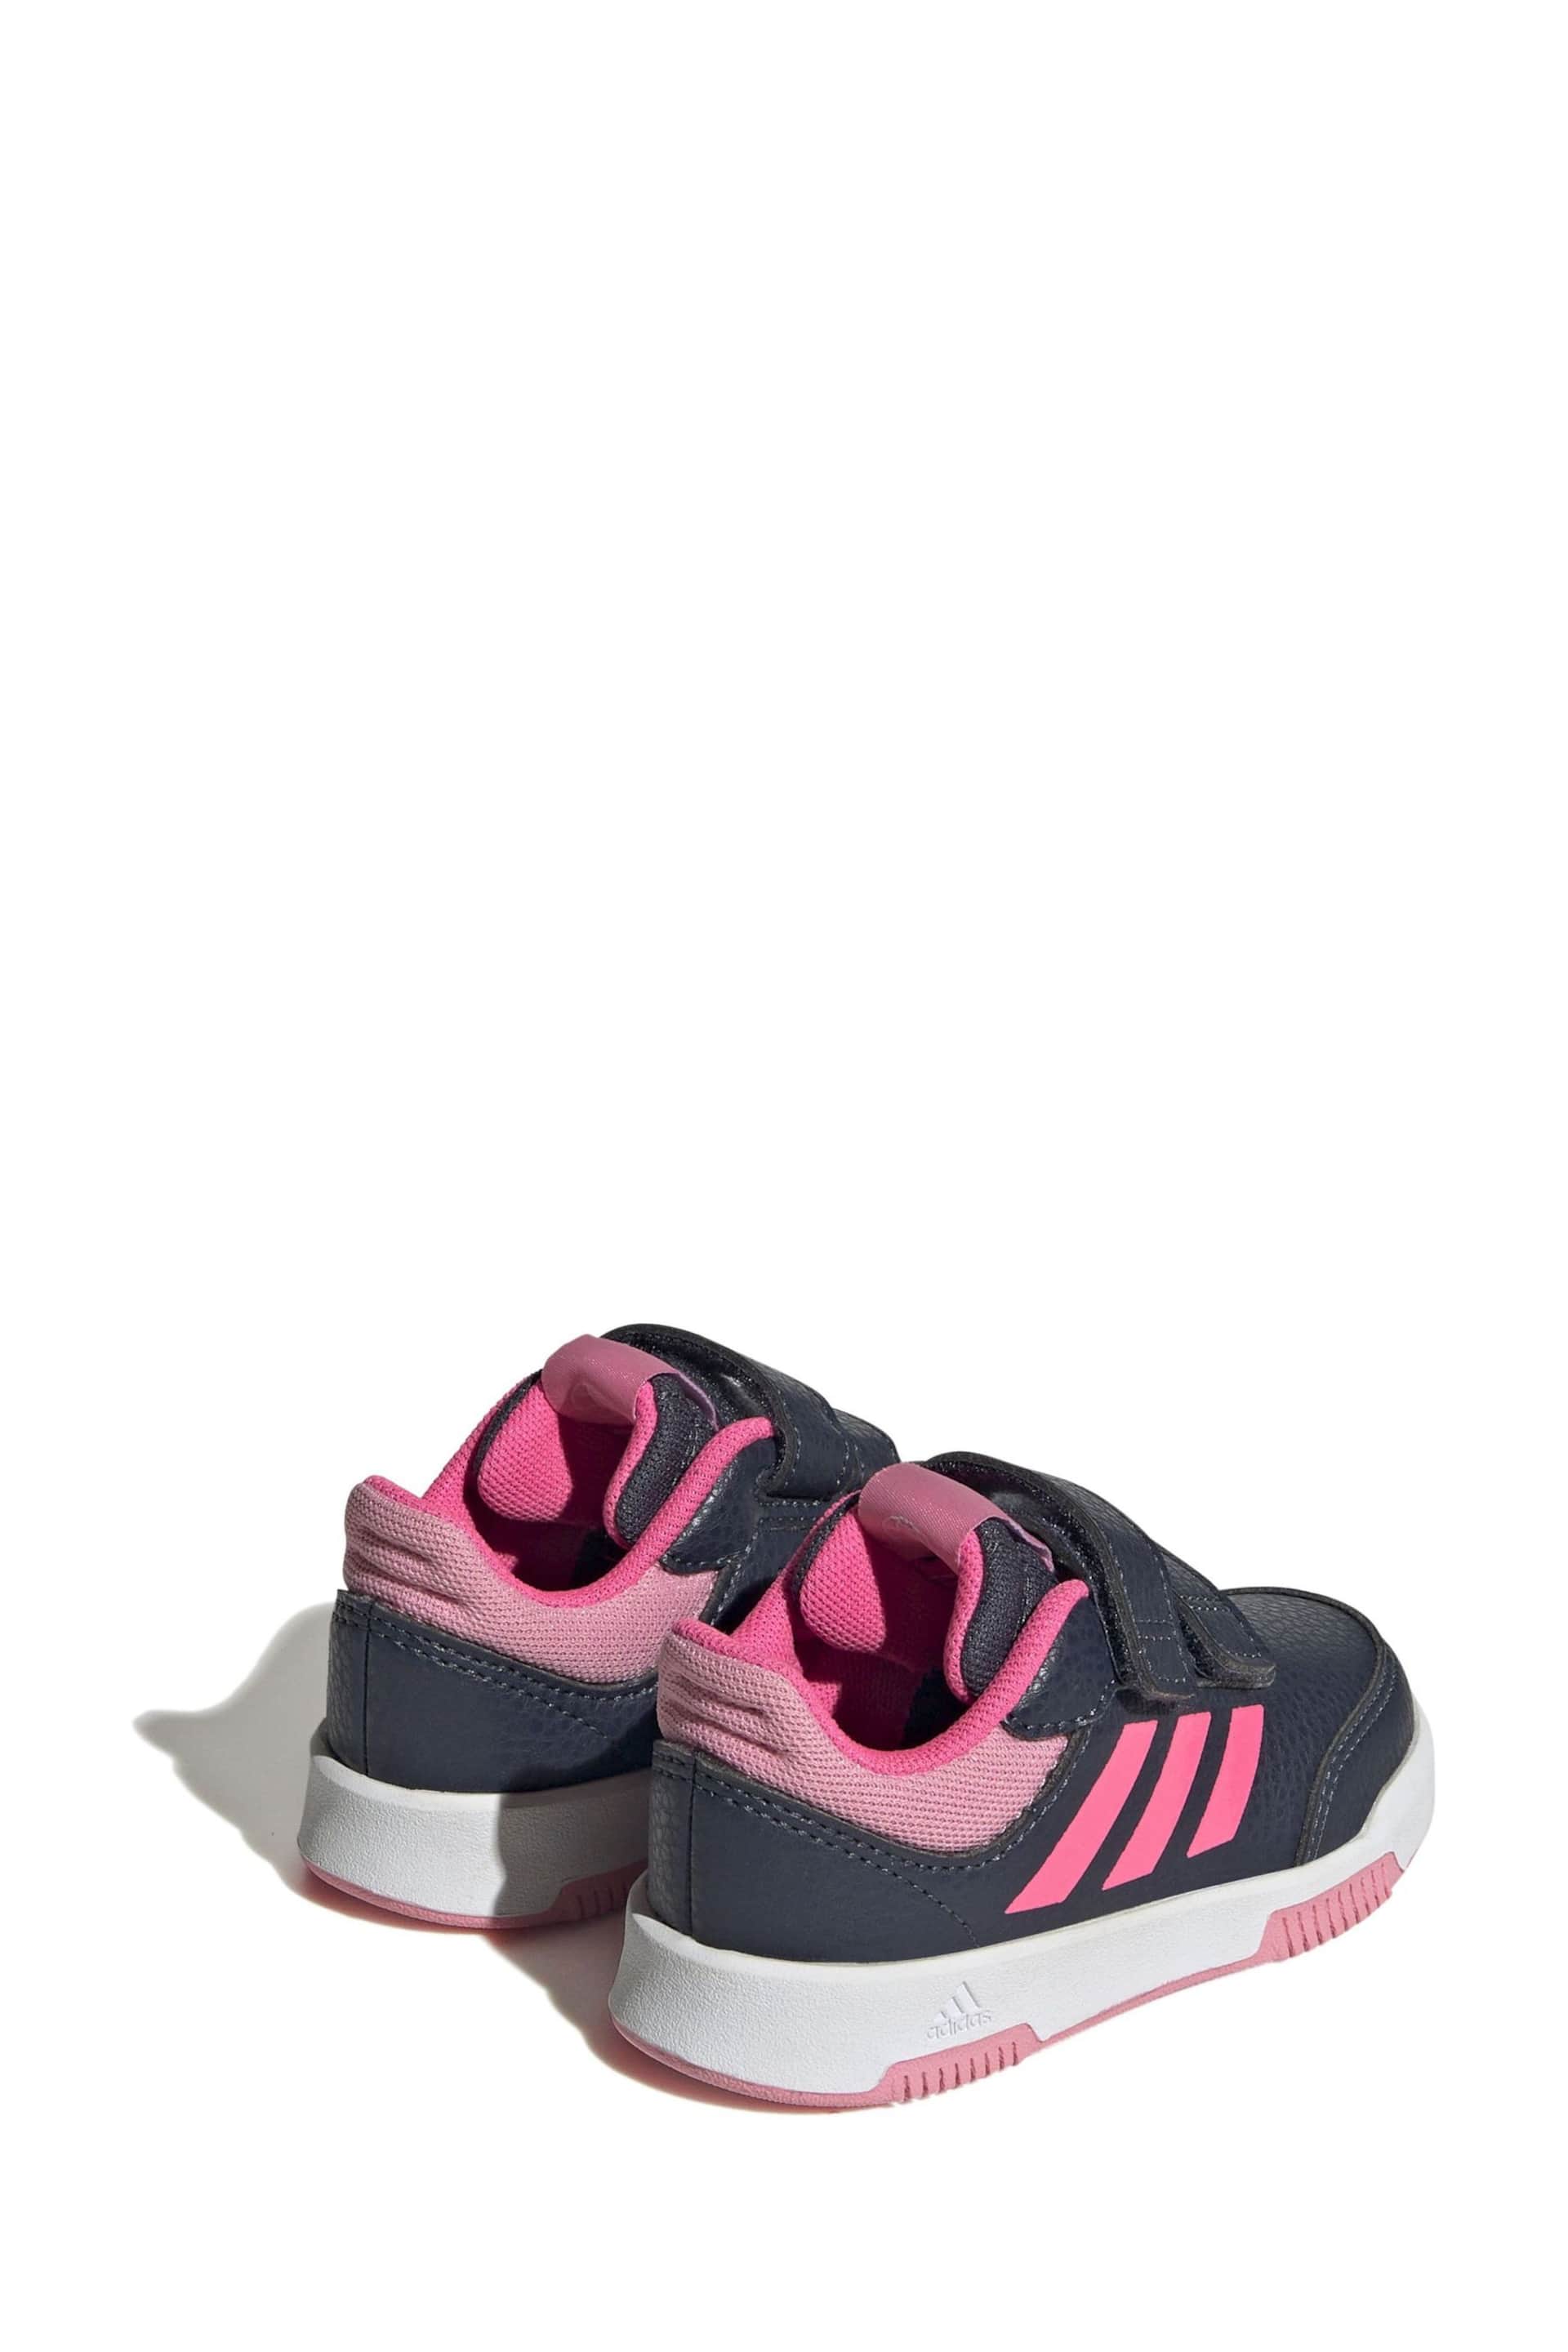 adidas Black/Pink Infant Tensaur Sport 2.0 I Trainers - Image 3 of 9